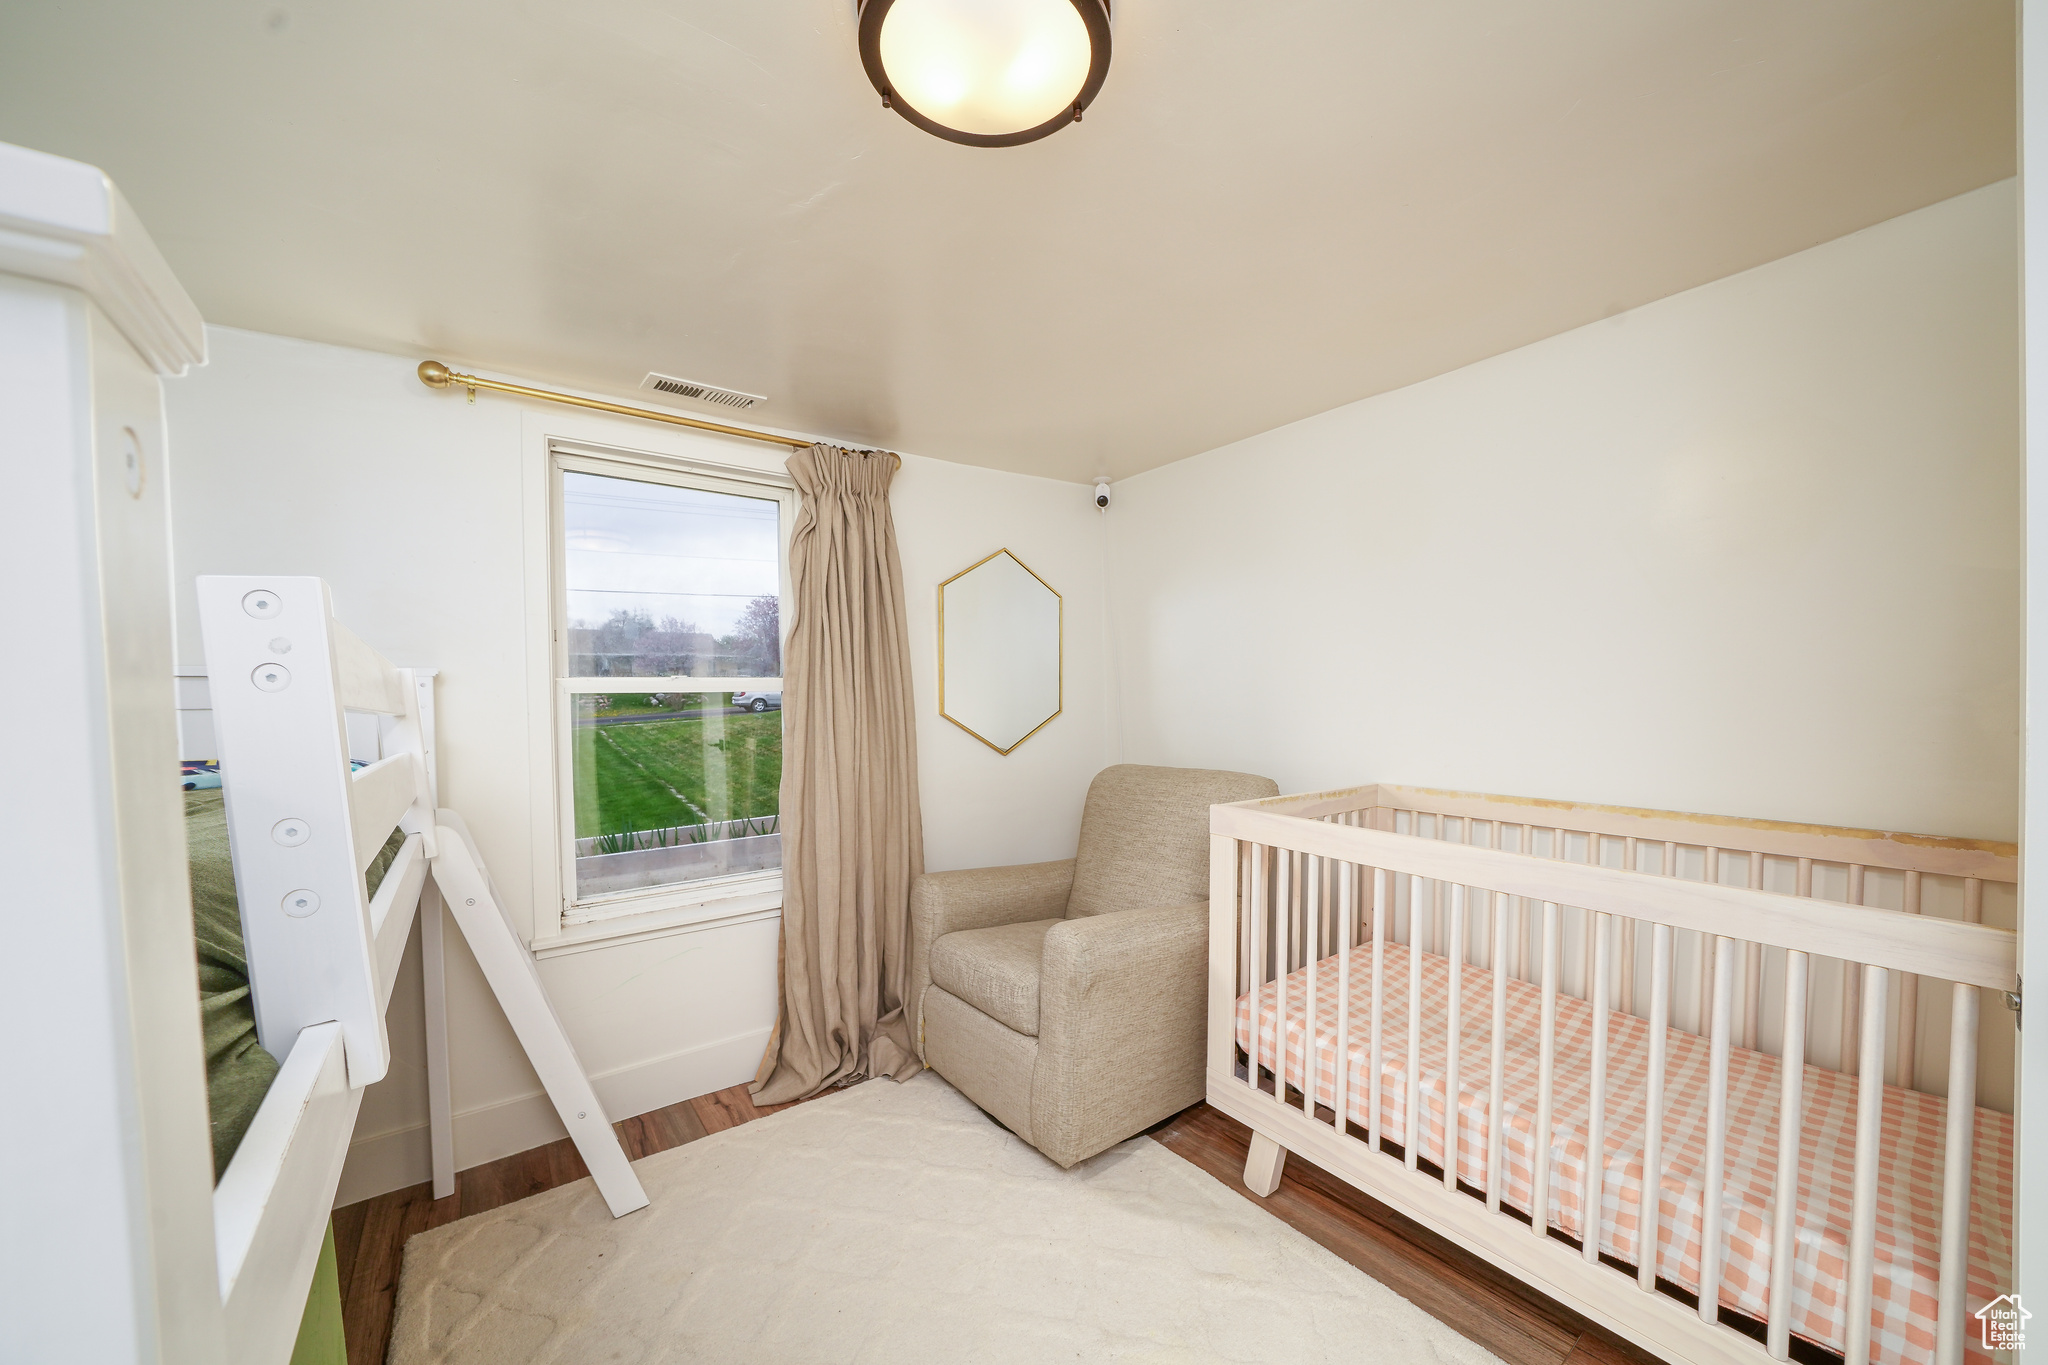 Bedroom featuring a nursery area and laminate floors